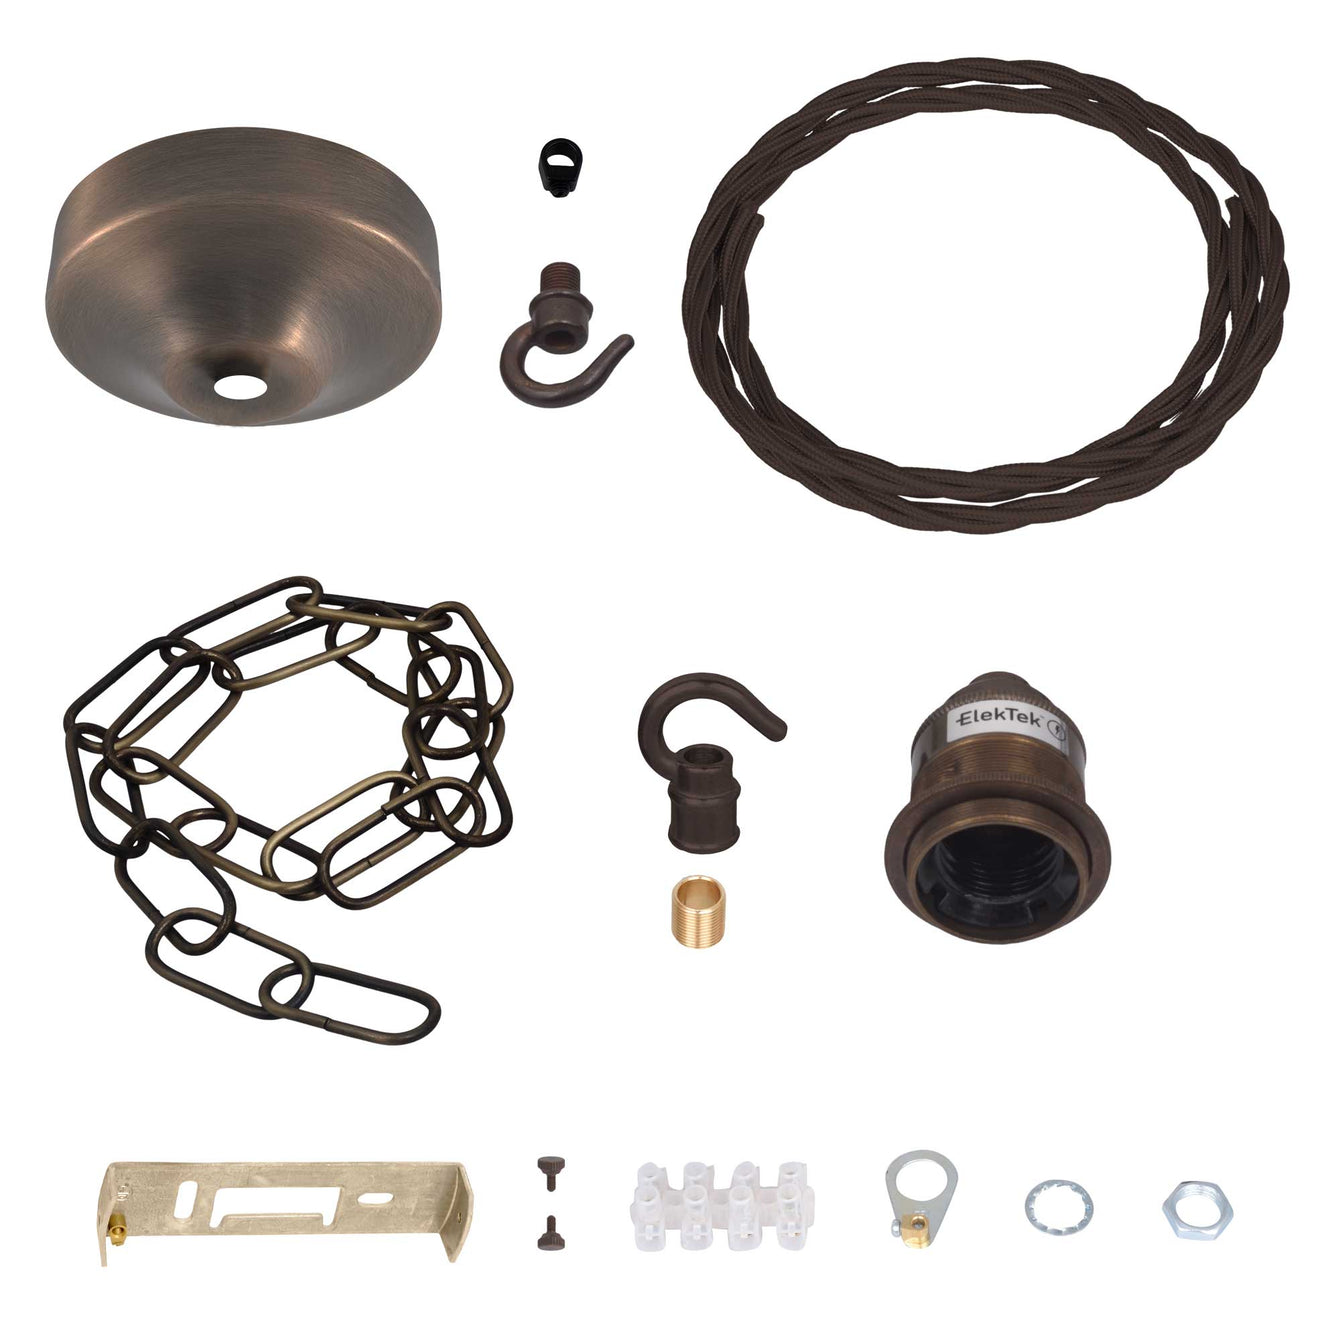 ElekTek Premium Pendant Light Kit DIY 100mm Convex Ceiling Rose, Chain, Twisted Flex and Lamp Holder E27 Shade Ring Hook - Buy It Better Nickel (Round Flex)